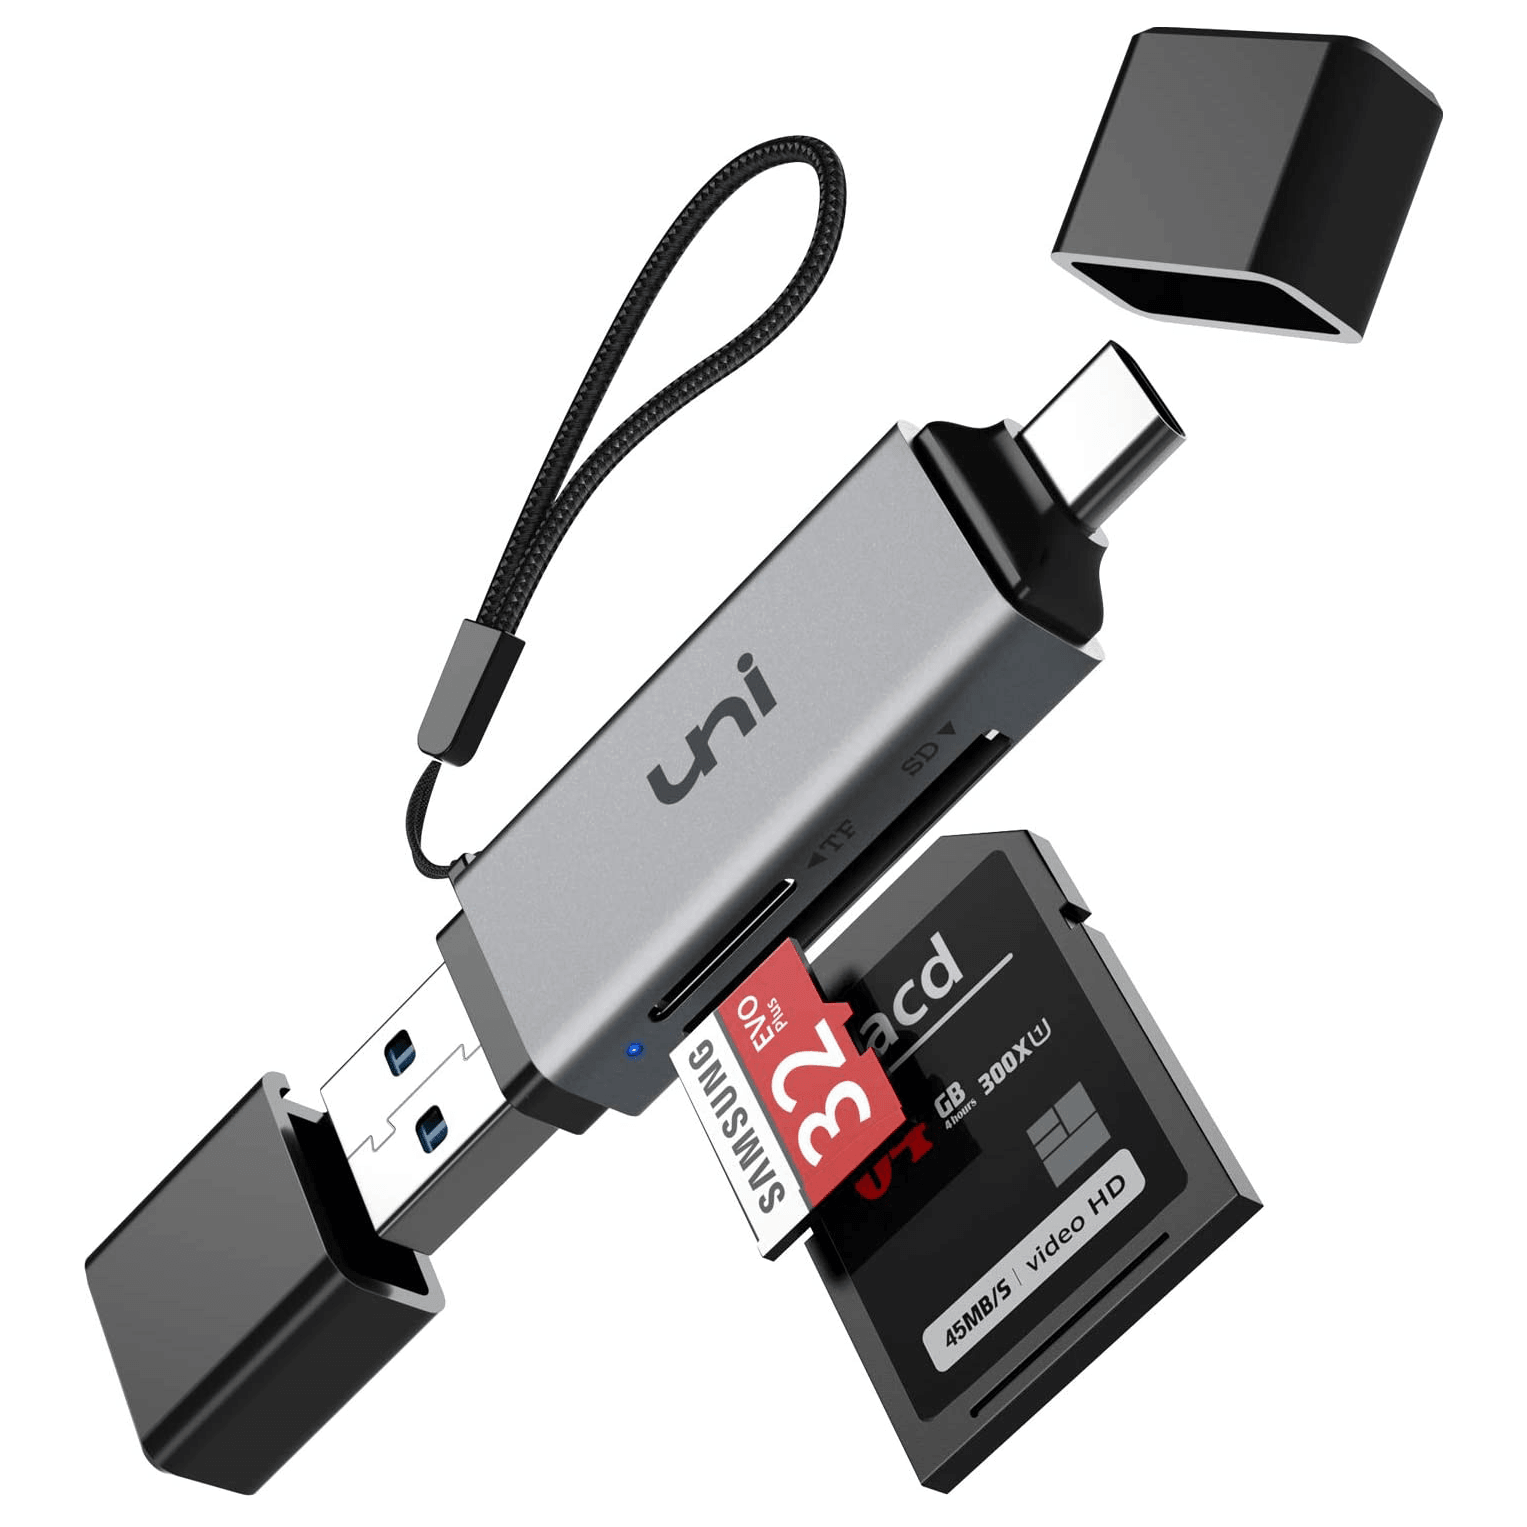 USB & USB-C SD/MicroSD Card Reader Card Adapter, UHS-I |